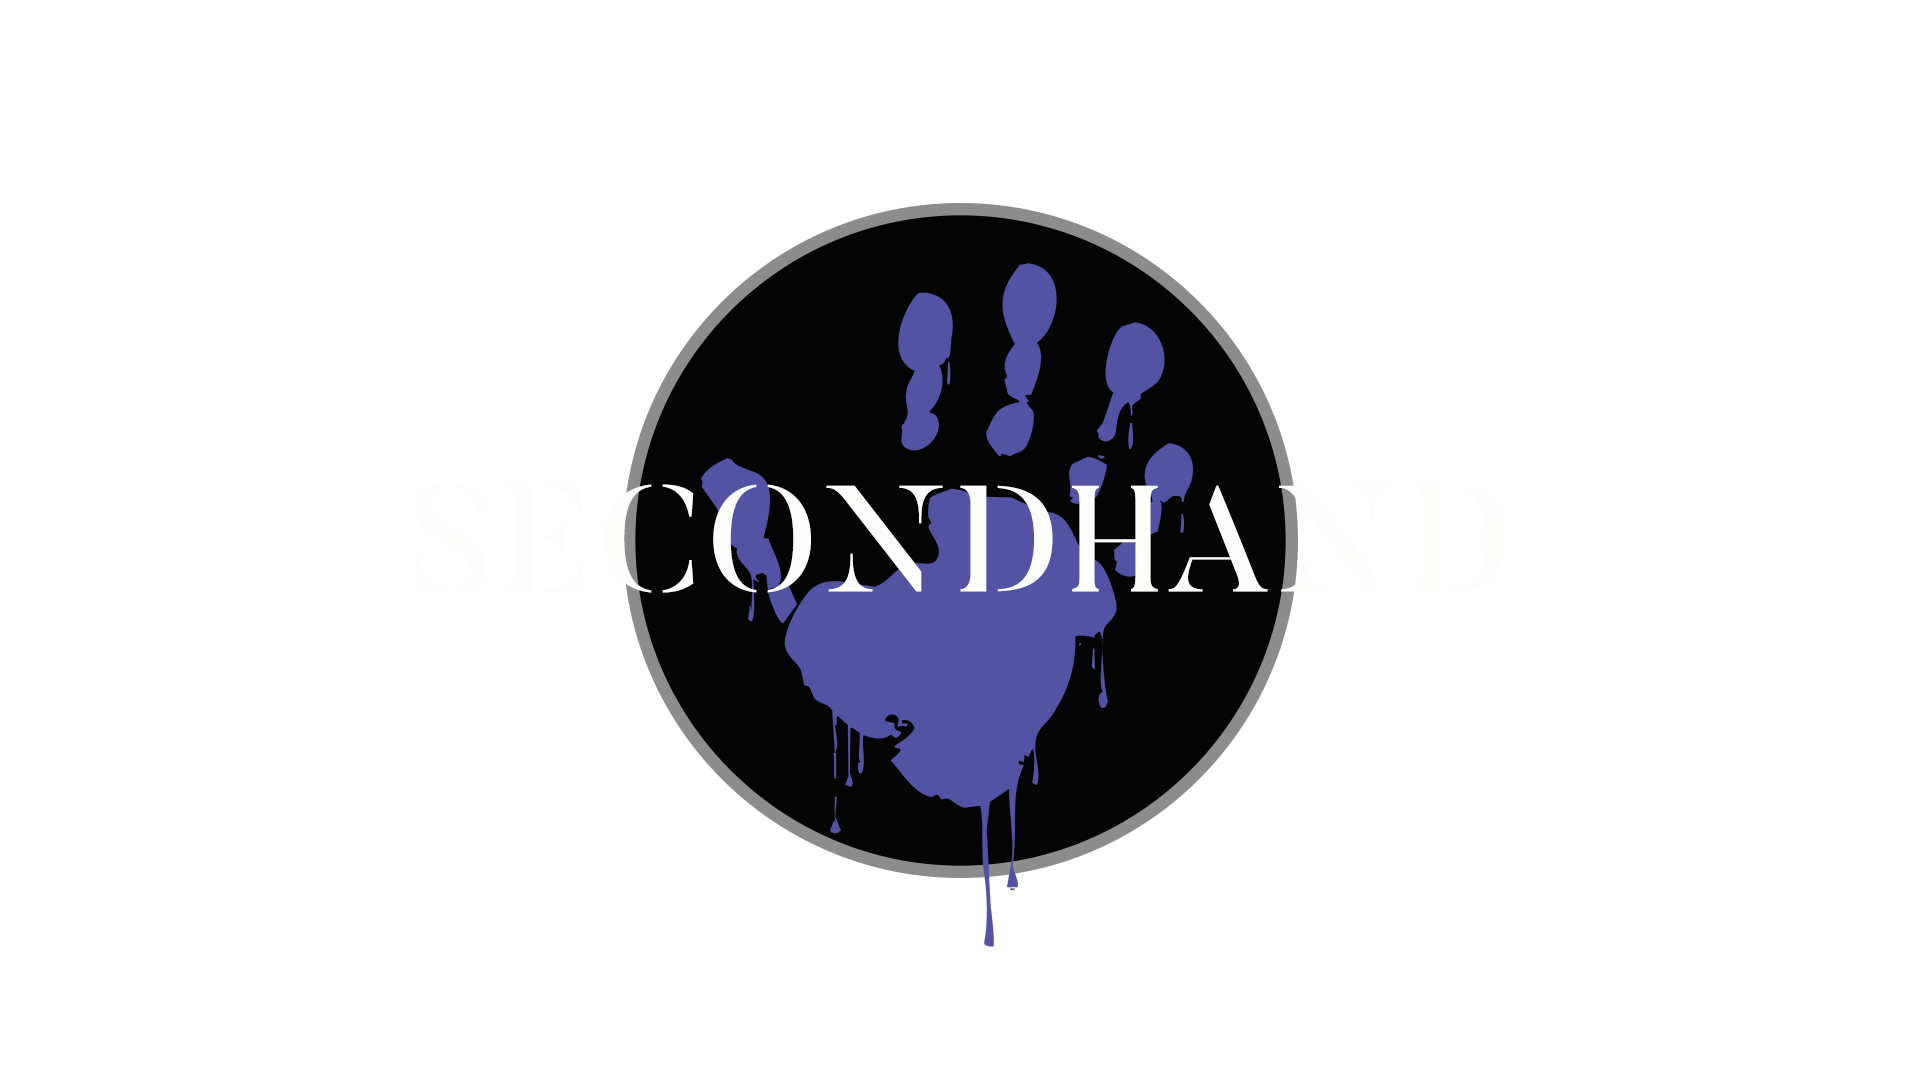 secondhand